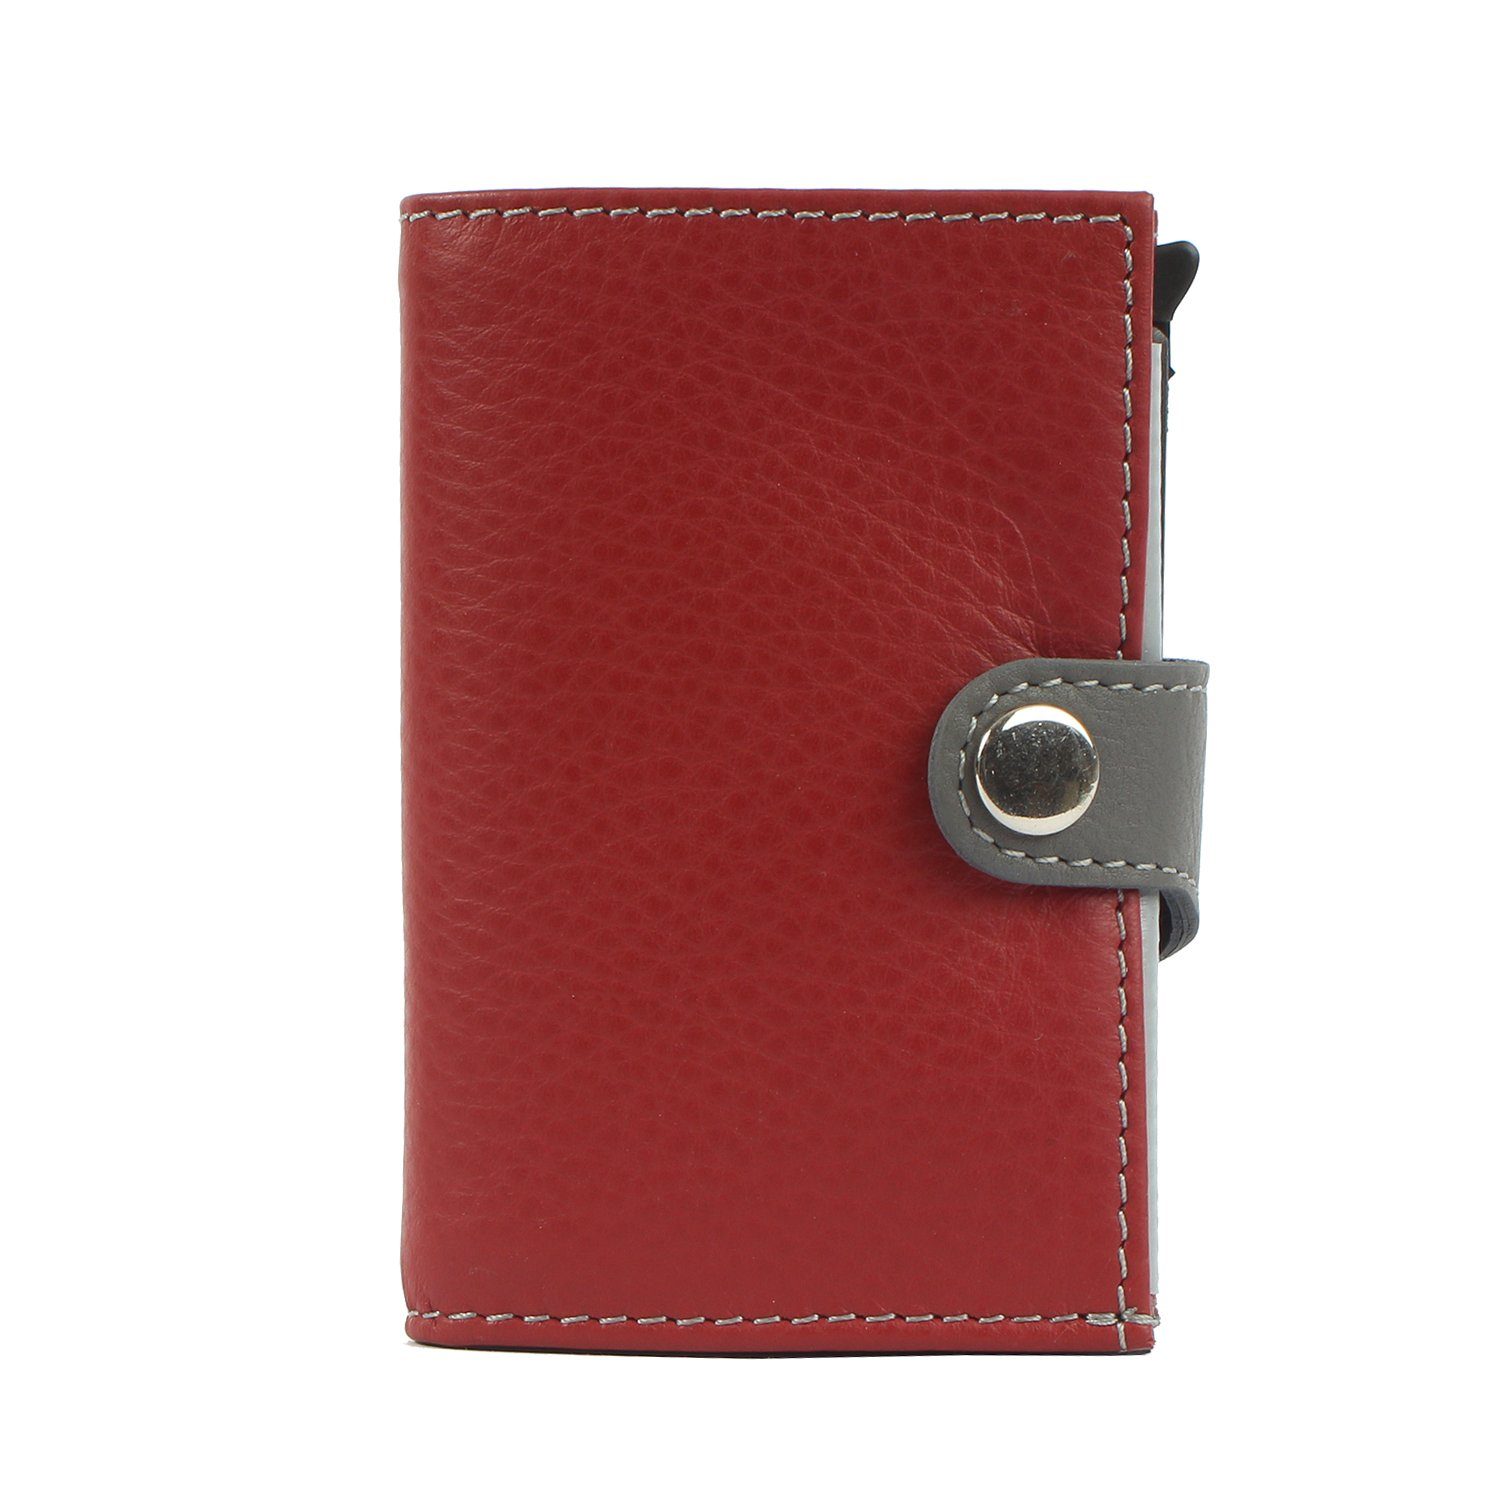 Super günstig Margelisch Upcycling Mini Geldbörse aus Kreditkartenbörse single noonyu Leder leather, karminrot